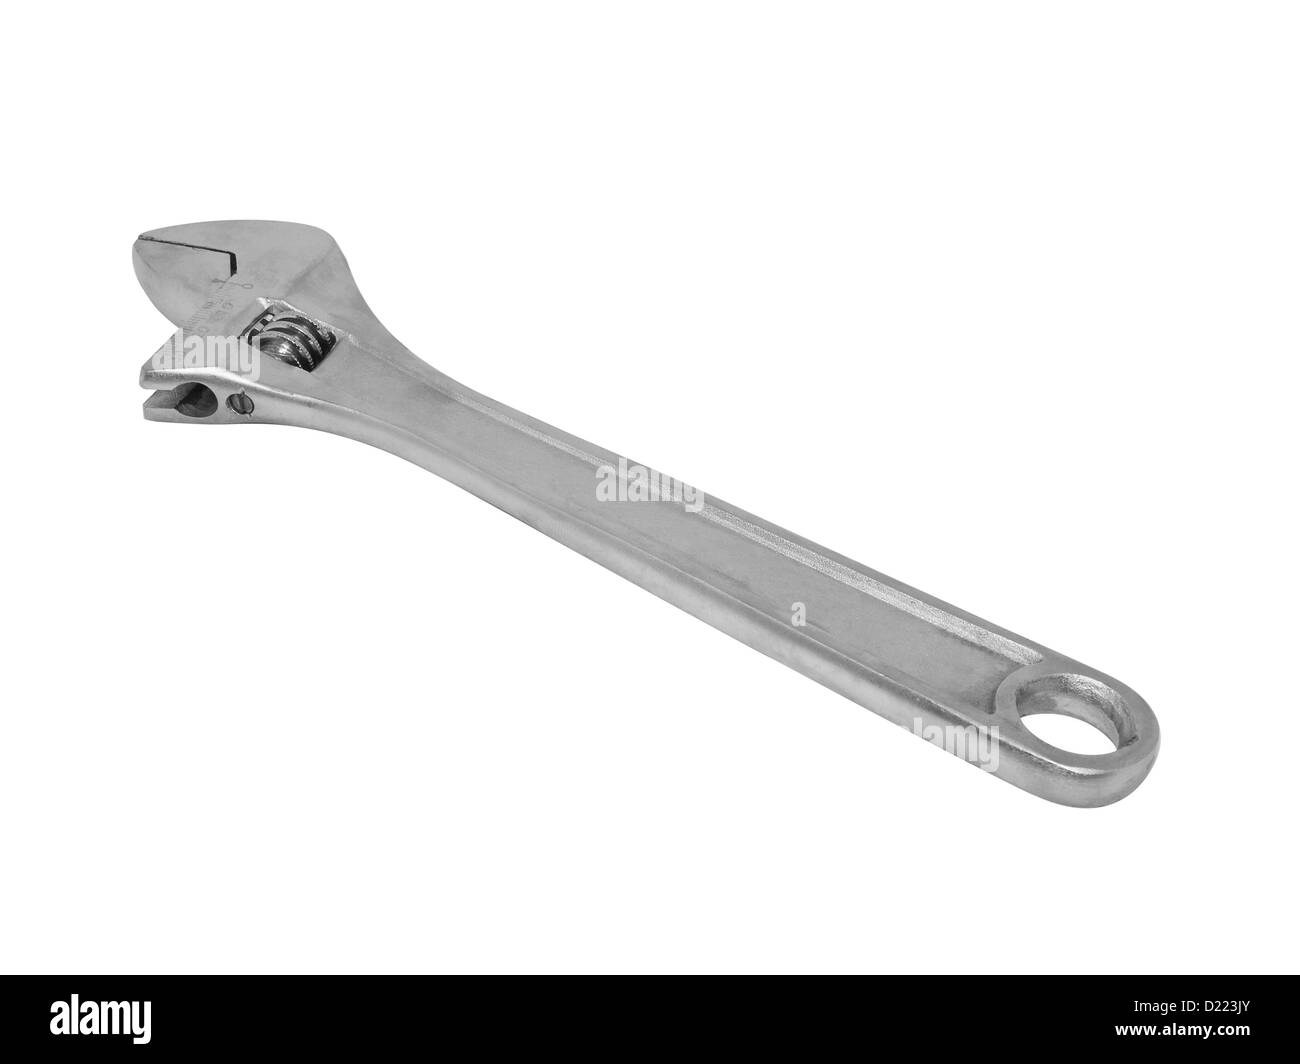 Isolated adjustable wrench on white background. Stock Photo